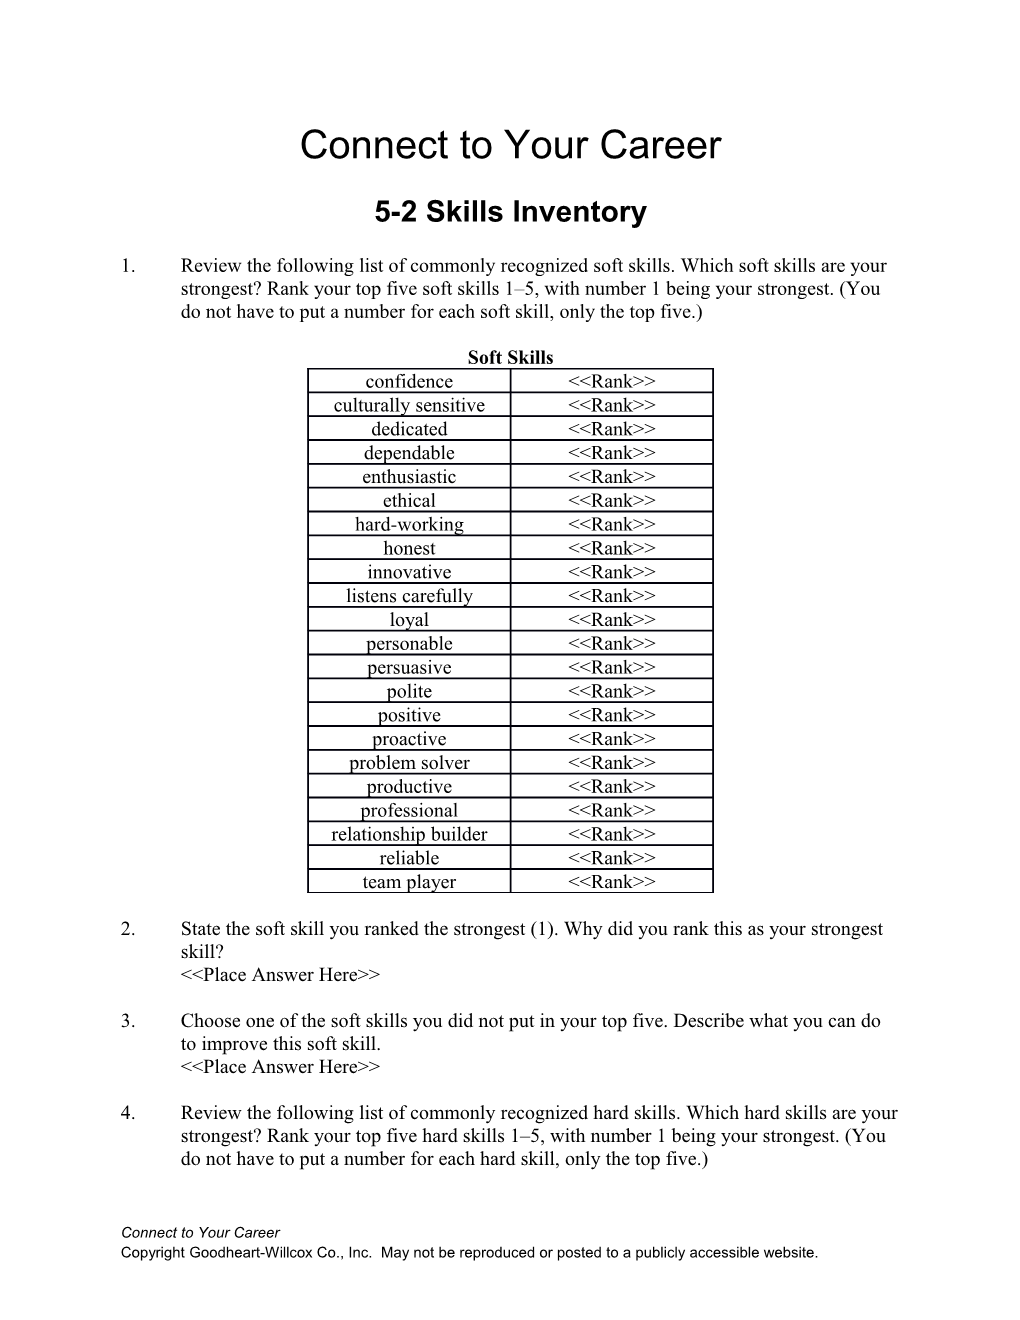 5-2 Skills Inventory